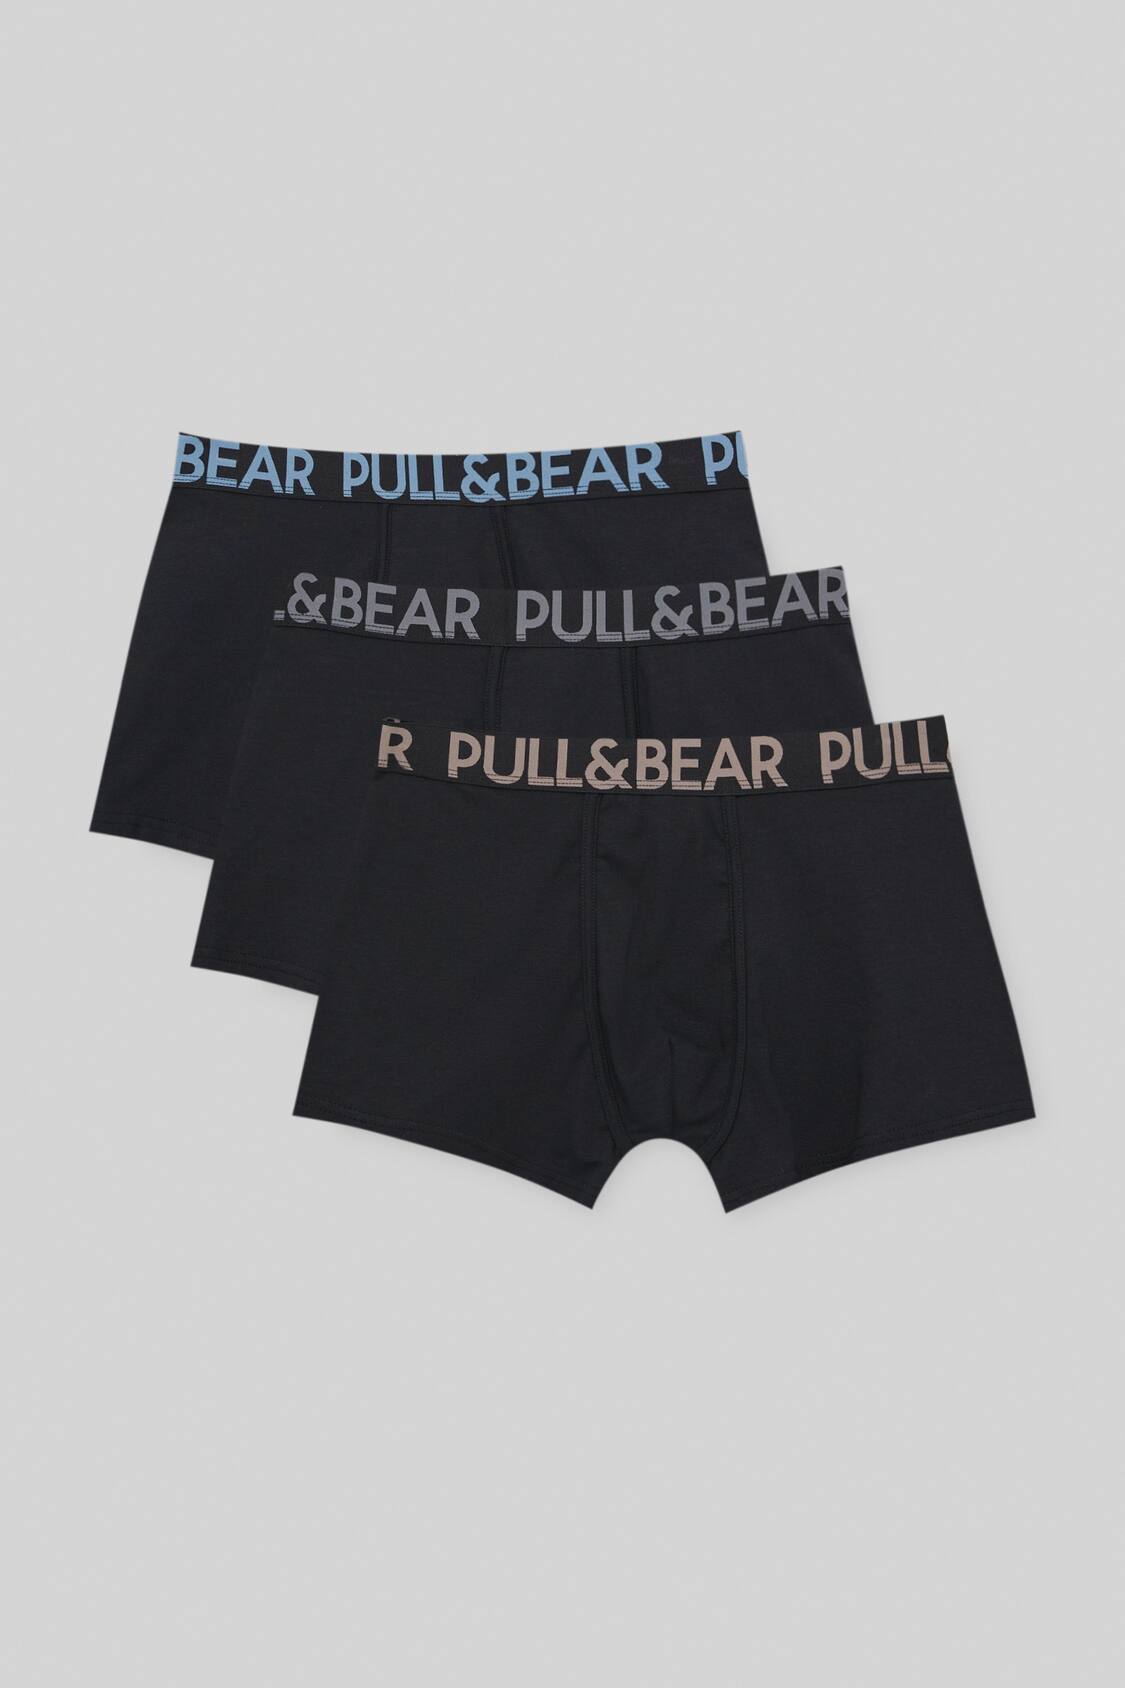 mundo centavo finalizando Pack of Pull&Bear boxers - PULL&BEAR